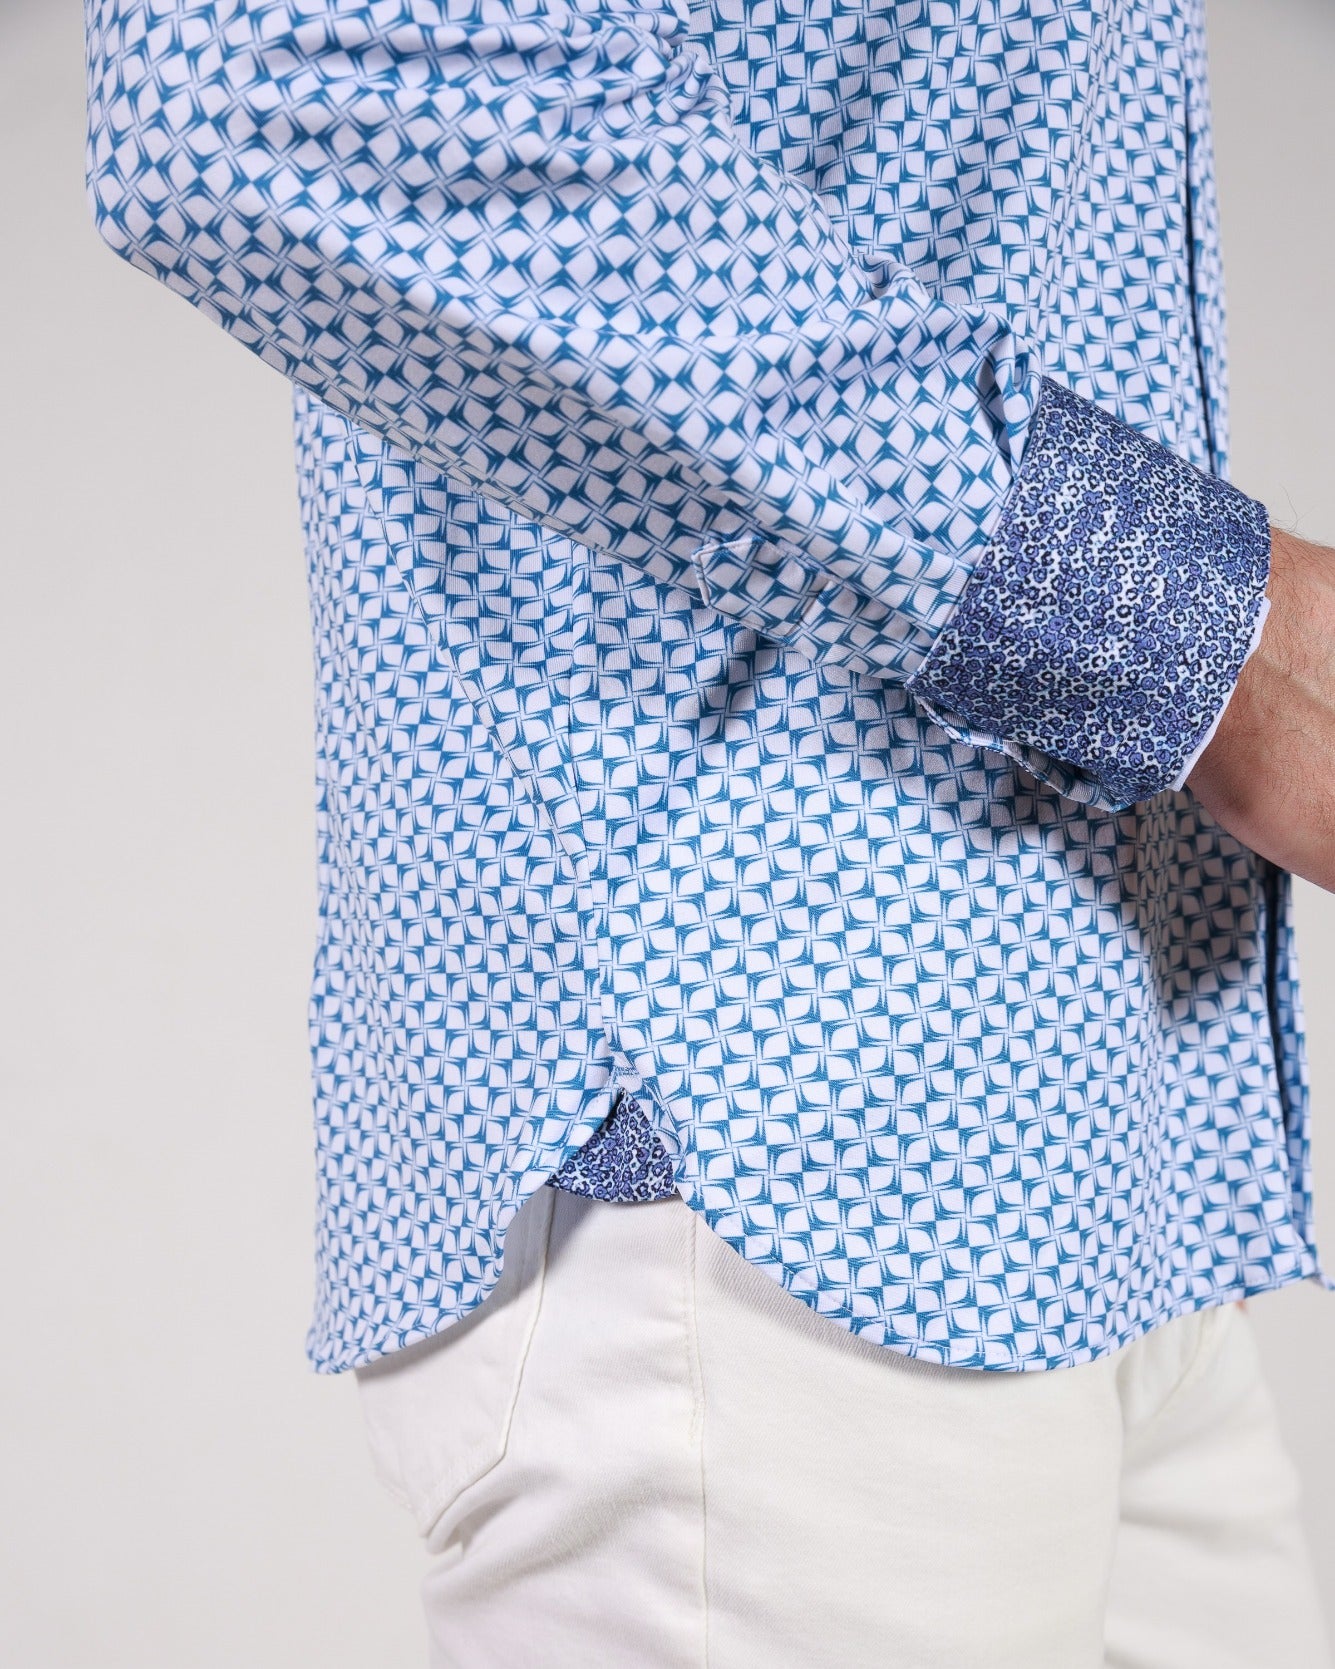 Geometric Printed 8-Way Stretch Long Sleeve Cotton Shirt